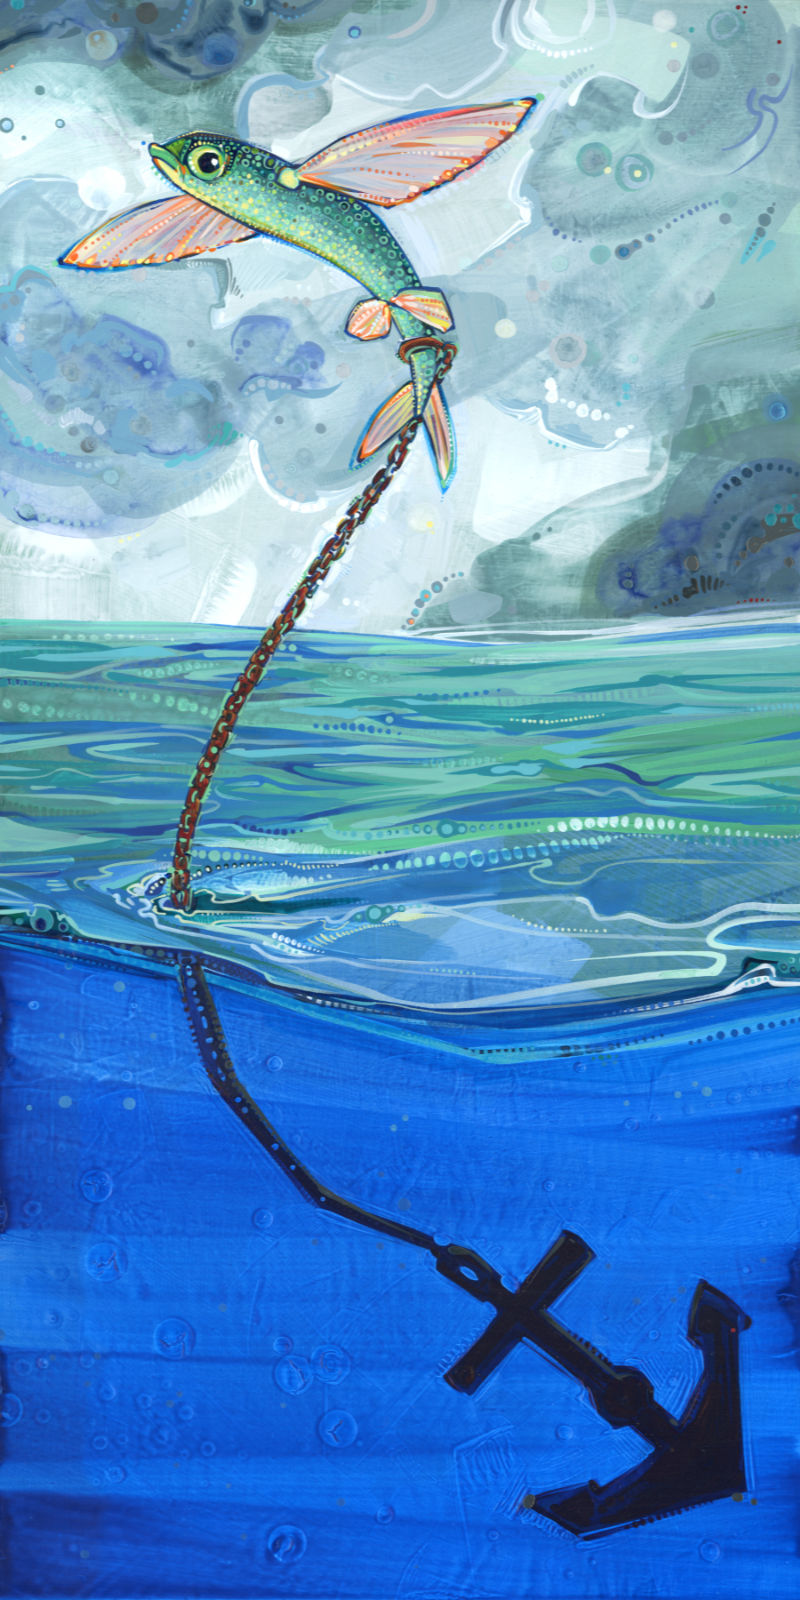 flying fish weighed down by an anchor, surrealist art by Gwenn Seemel